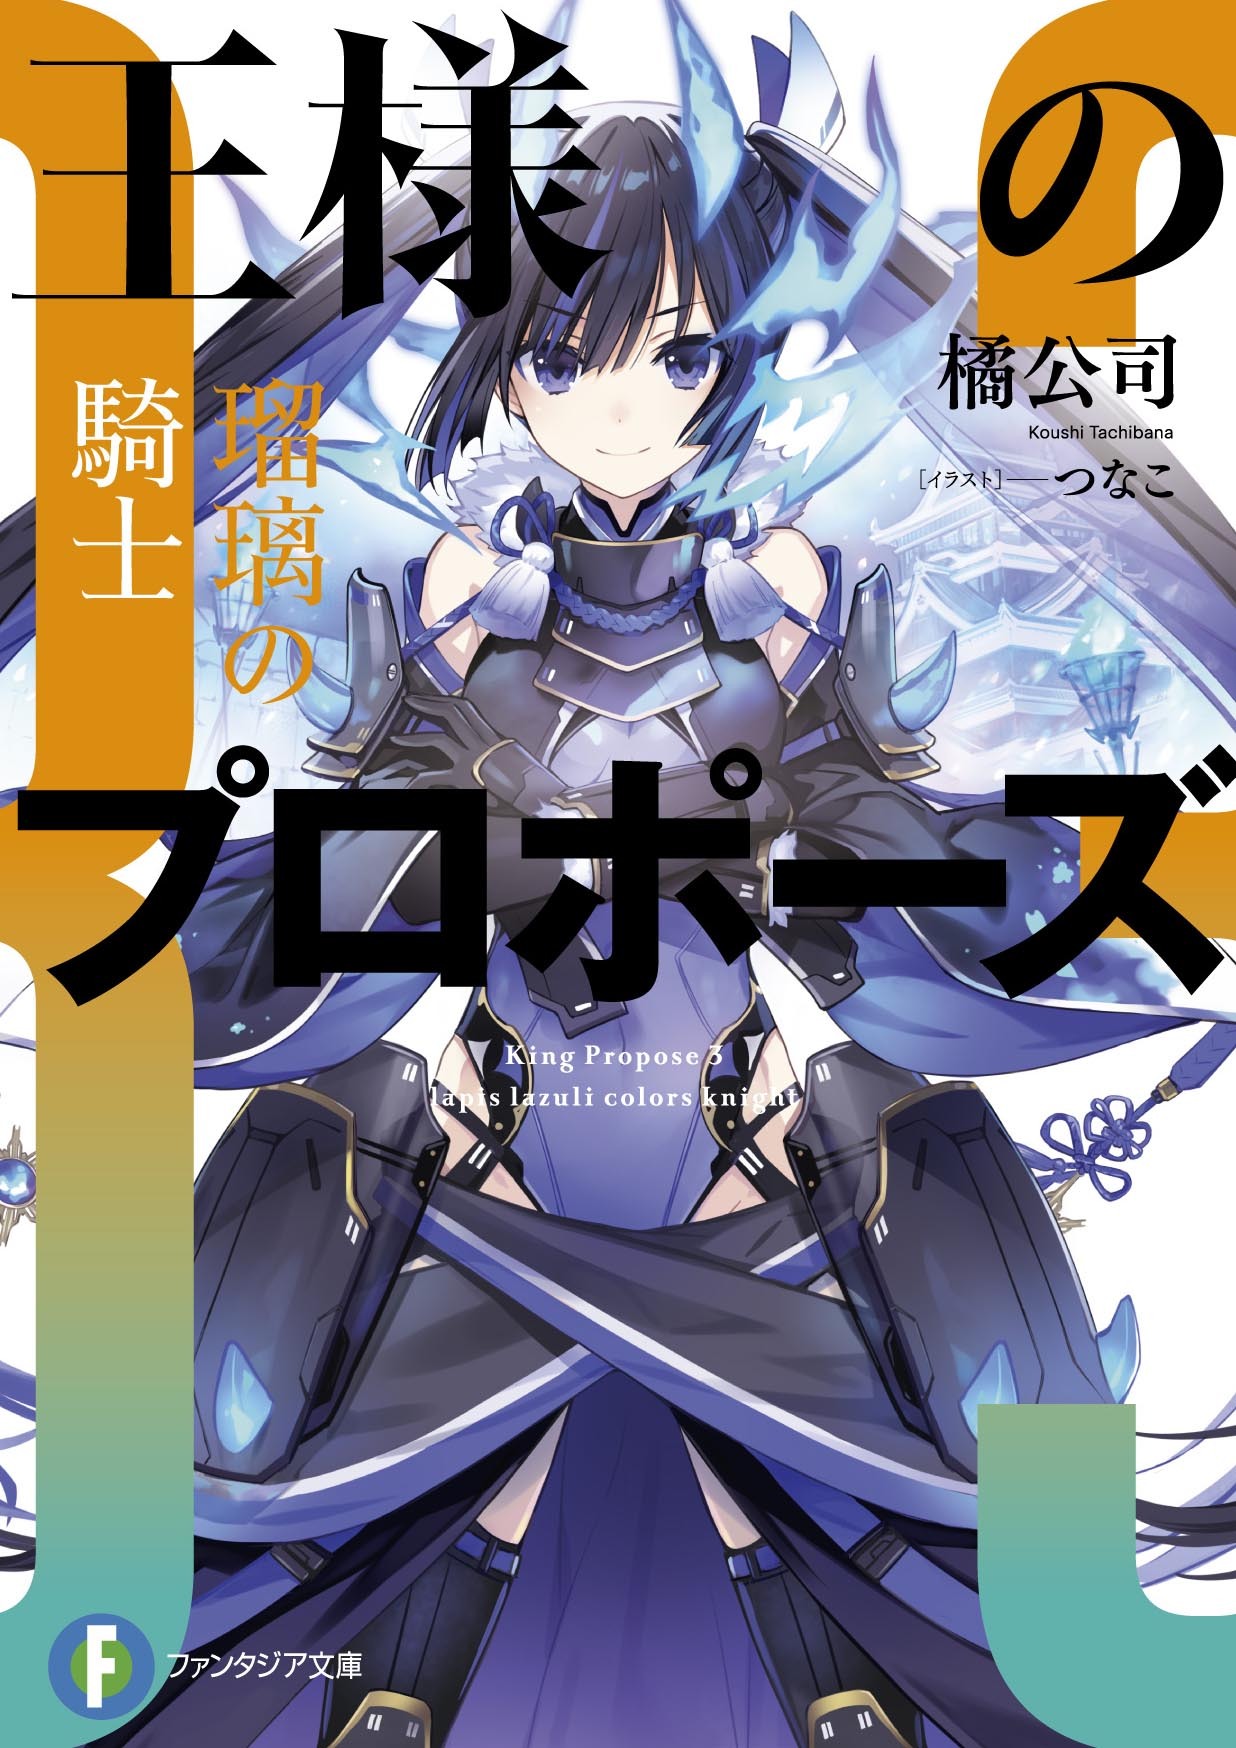 Las novelas ligeras Ousama no Proposal – Gokusai no Majo anunciaron su adaptación manga